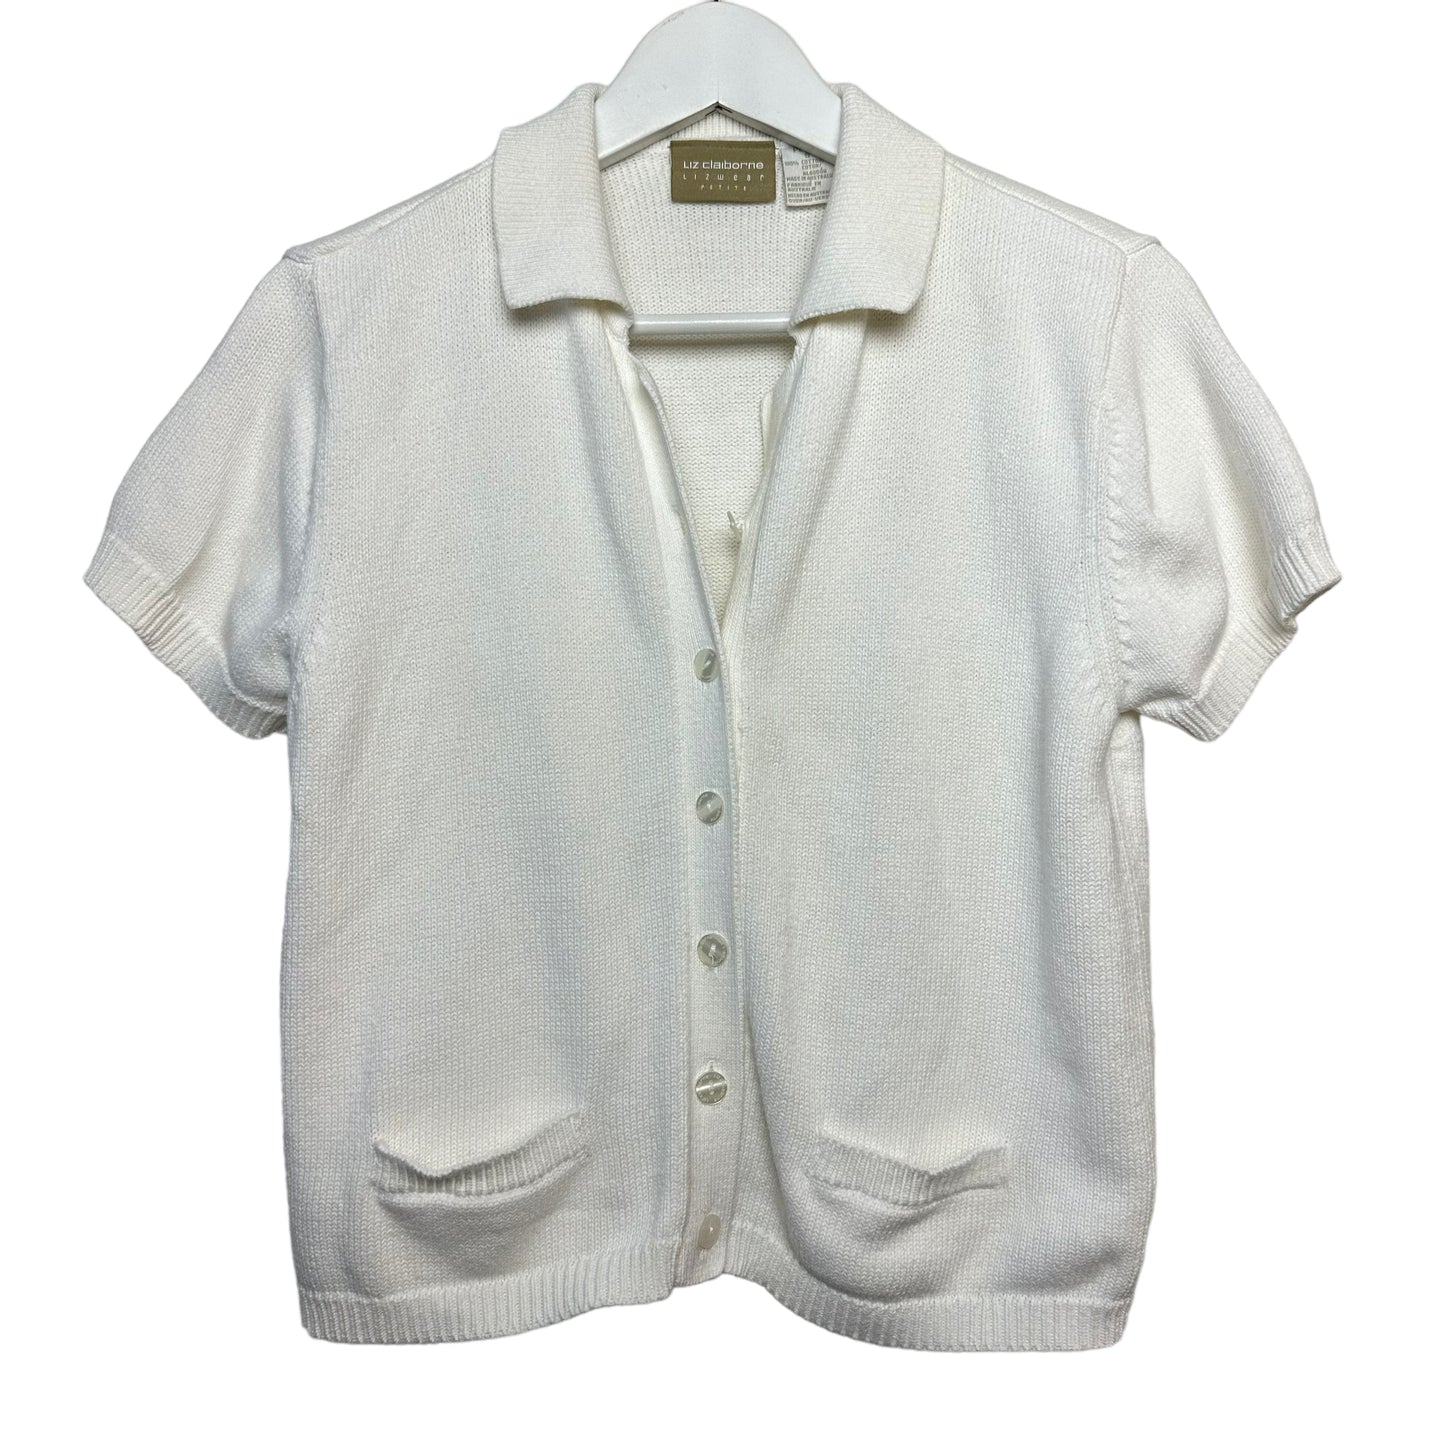 Vintage Liz Claiborne Knit Polo Sweater Cardigan Cropped White Small Petite